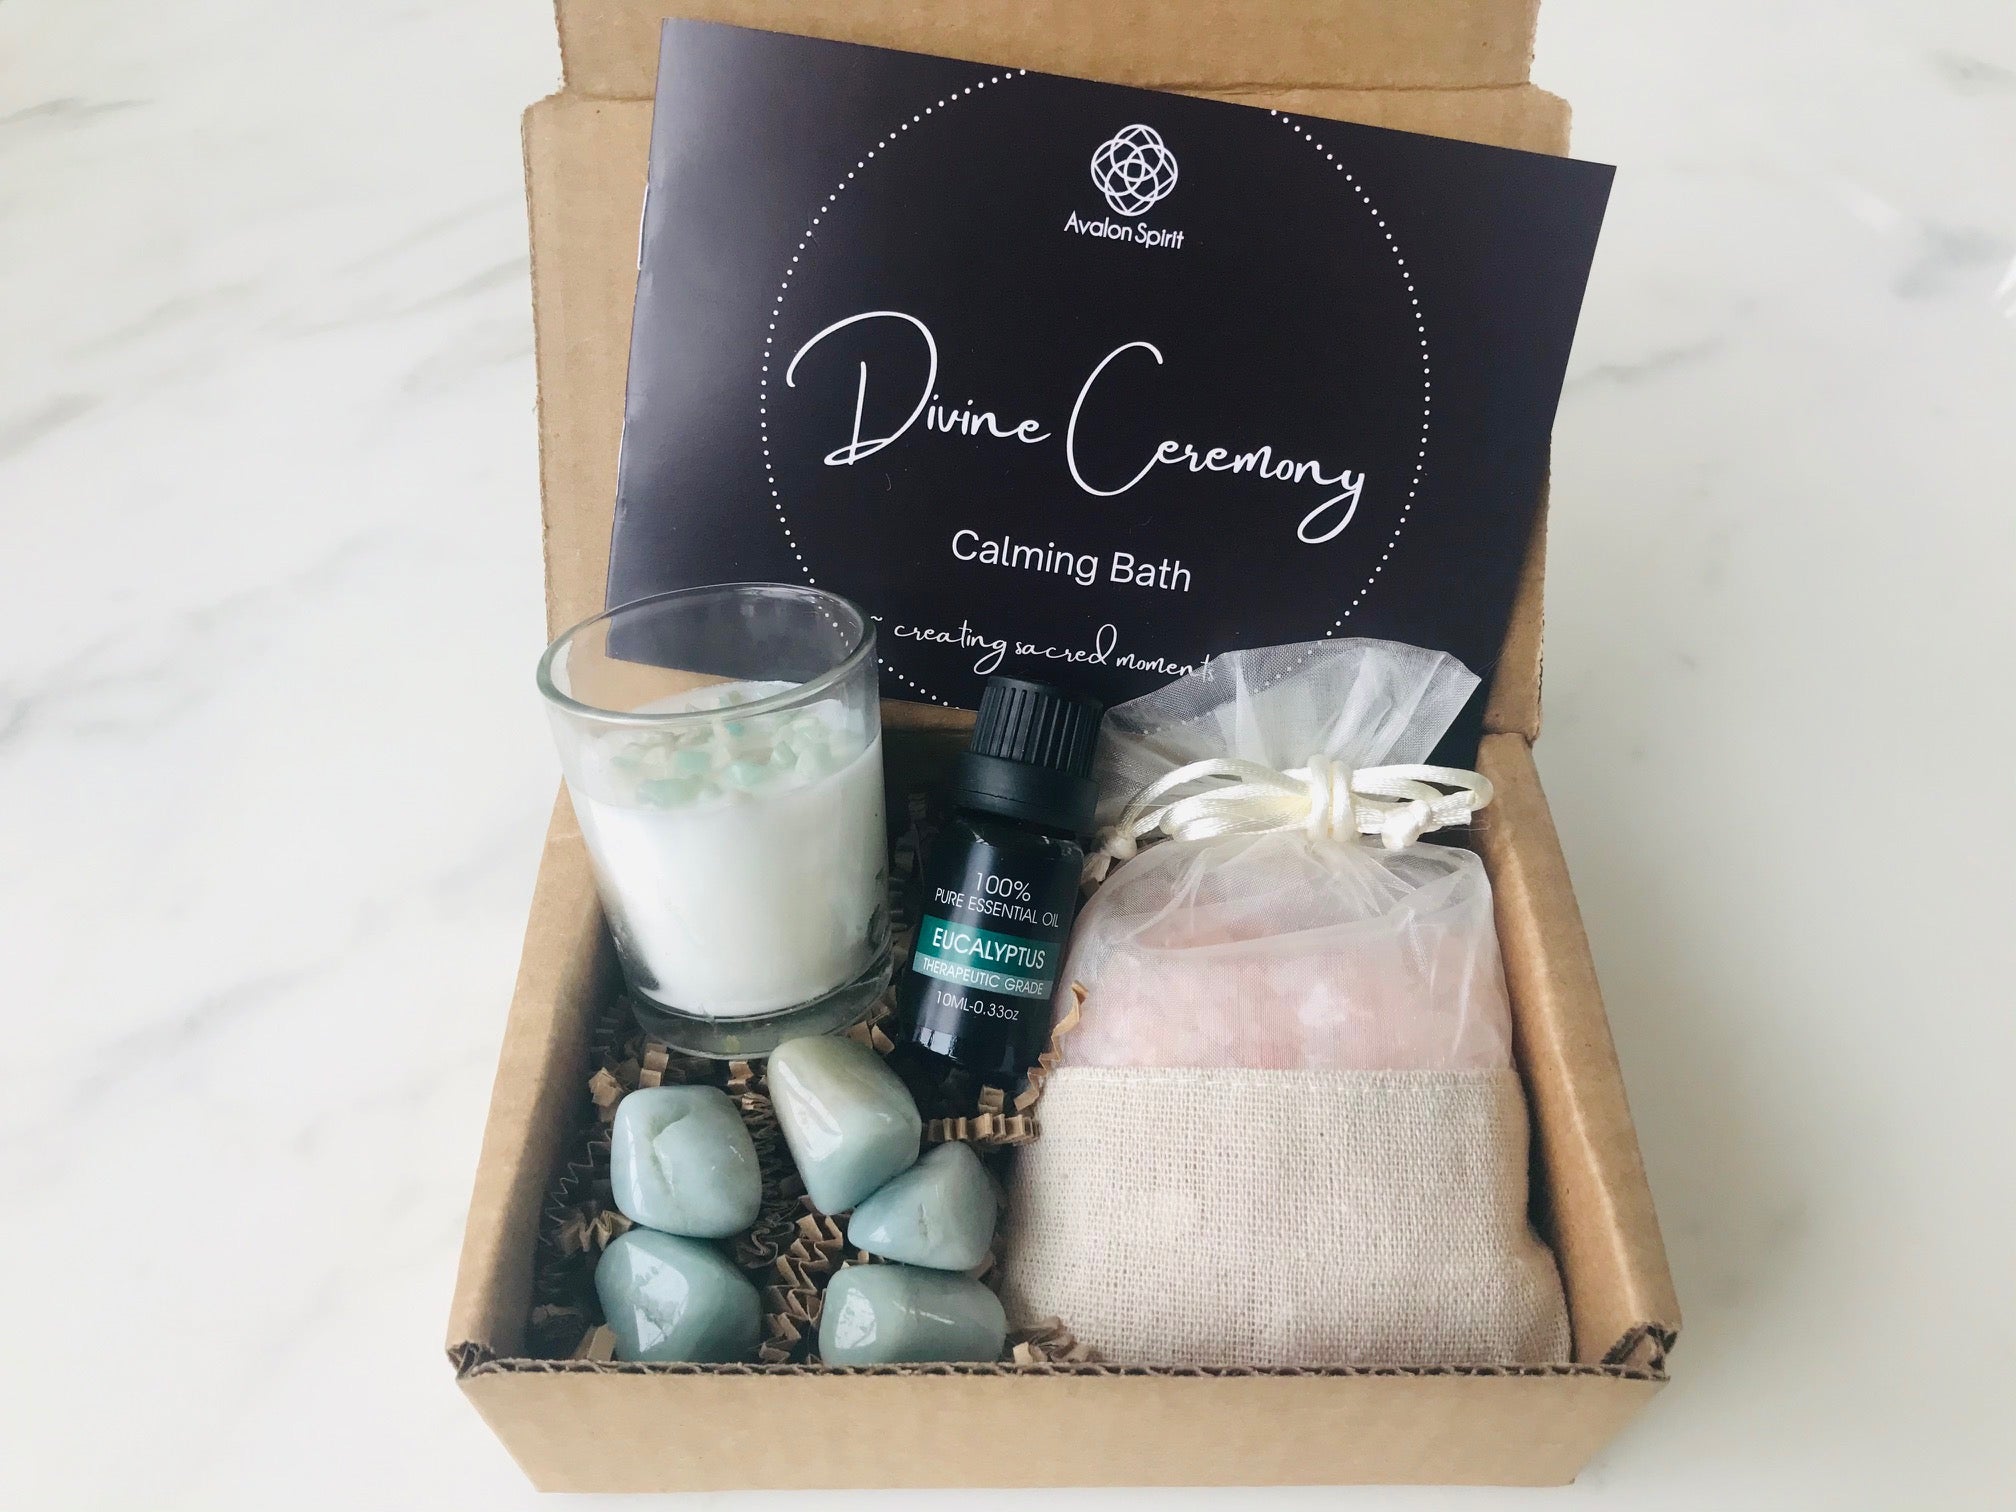 Calming Bath - Divine Ceremony Box